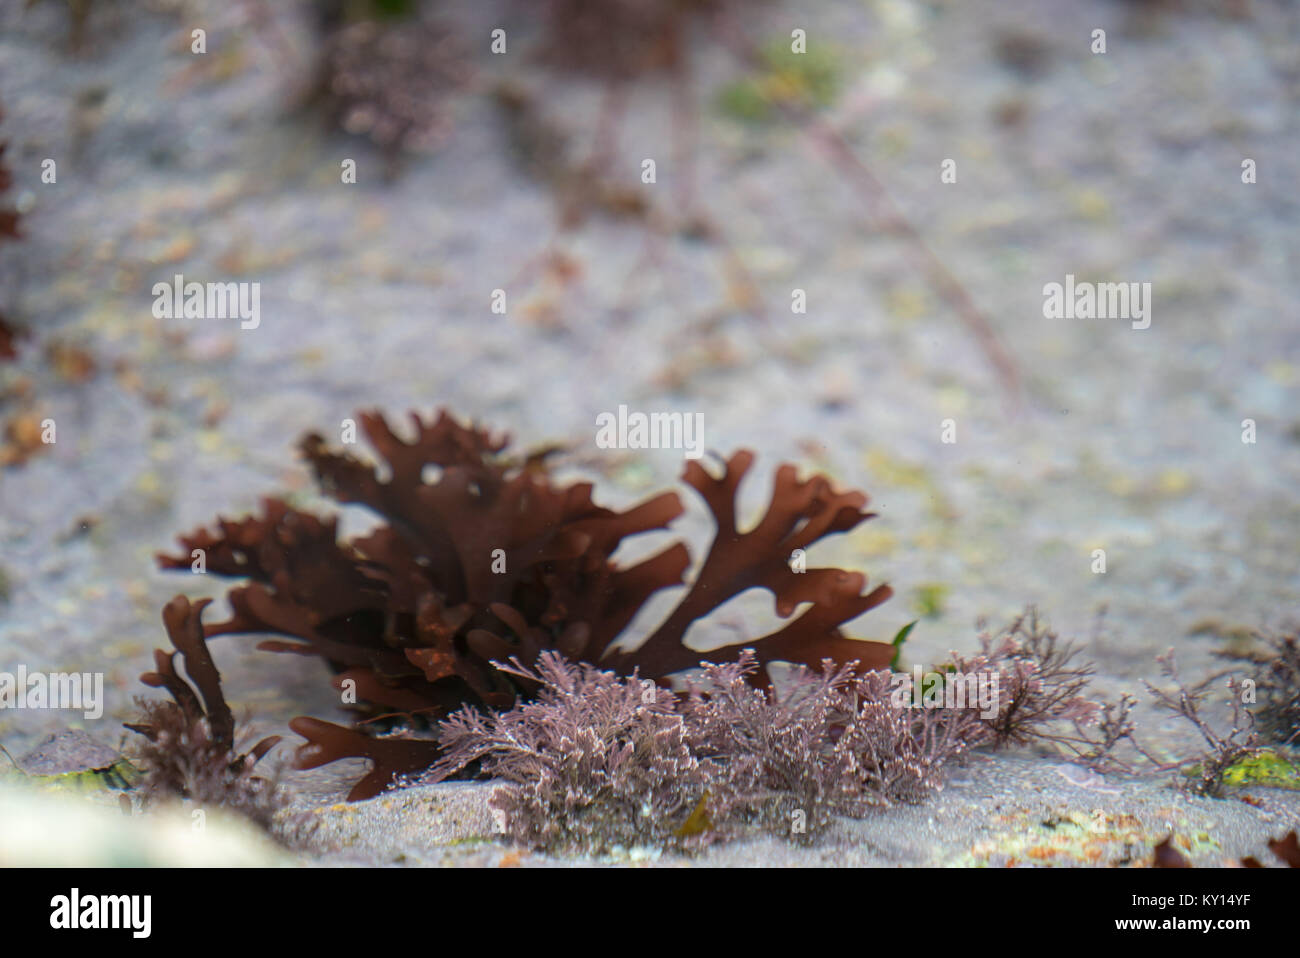 Heart of Red algae, Codium fragile, Fissurellidae, Fissurellidae and Lots Love on Land's End Granite (3 of 5) Stock Photo